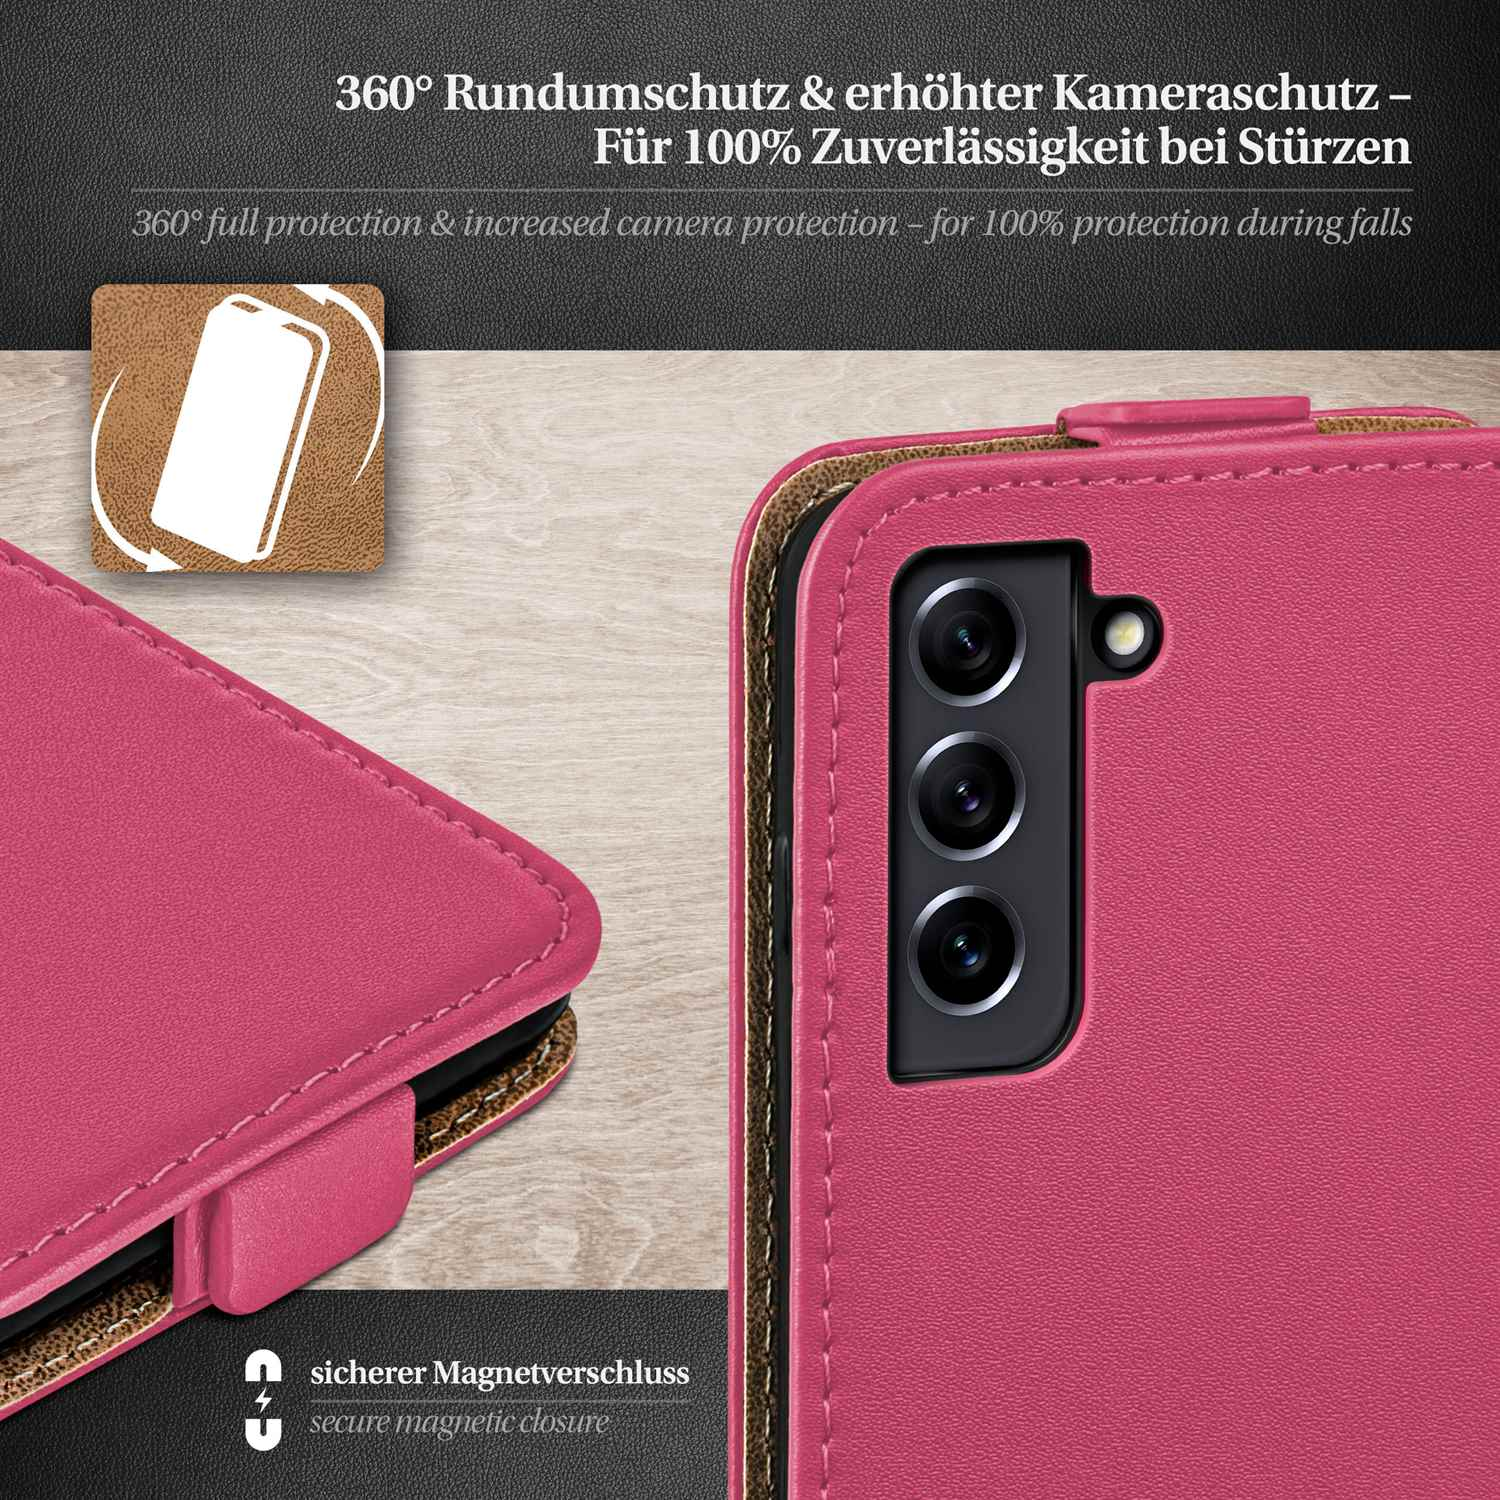 Case, Flip Galaxy S21 Samsung, MOEX Flip 5G, FE Berry-Fuchsia Cover,